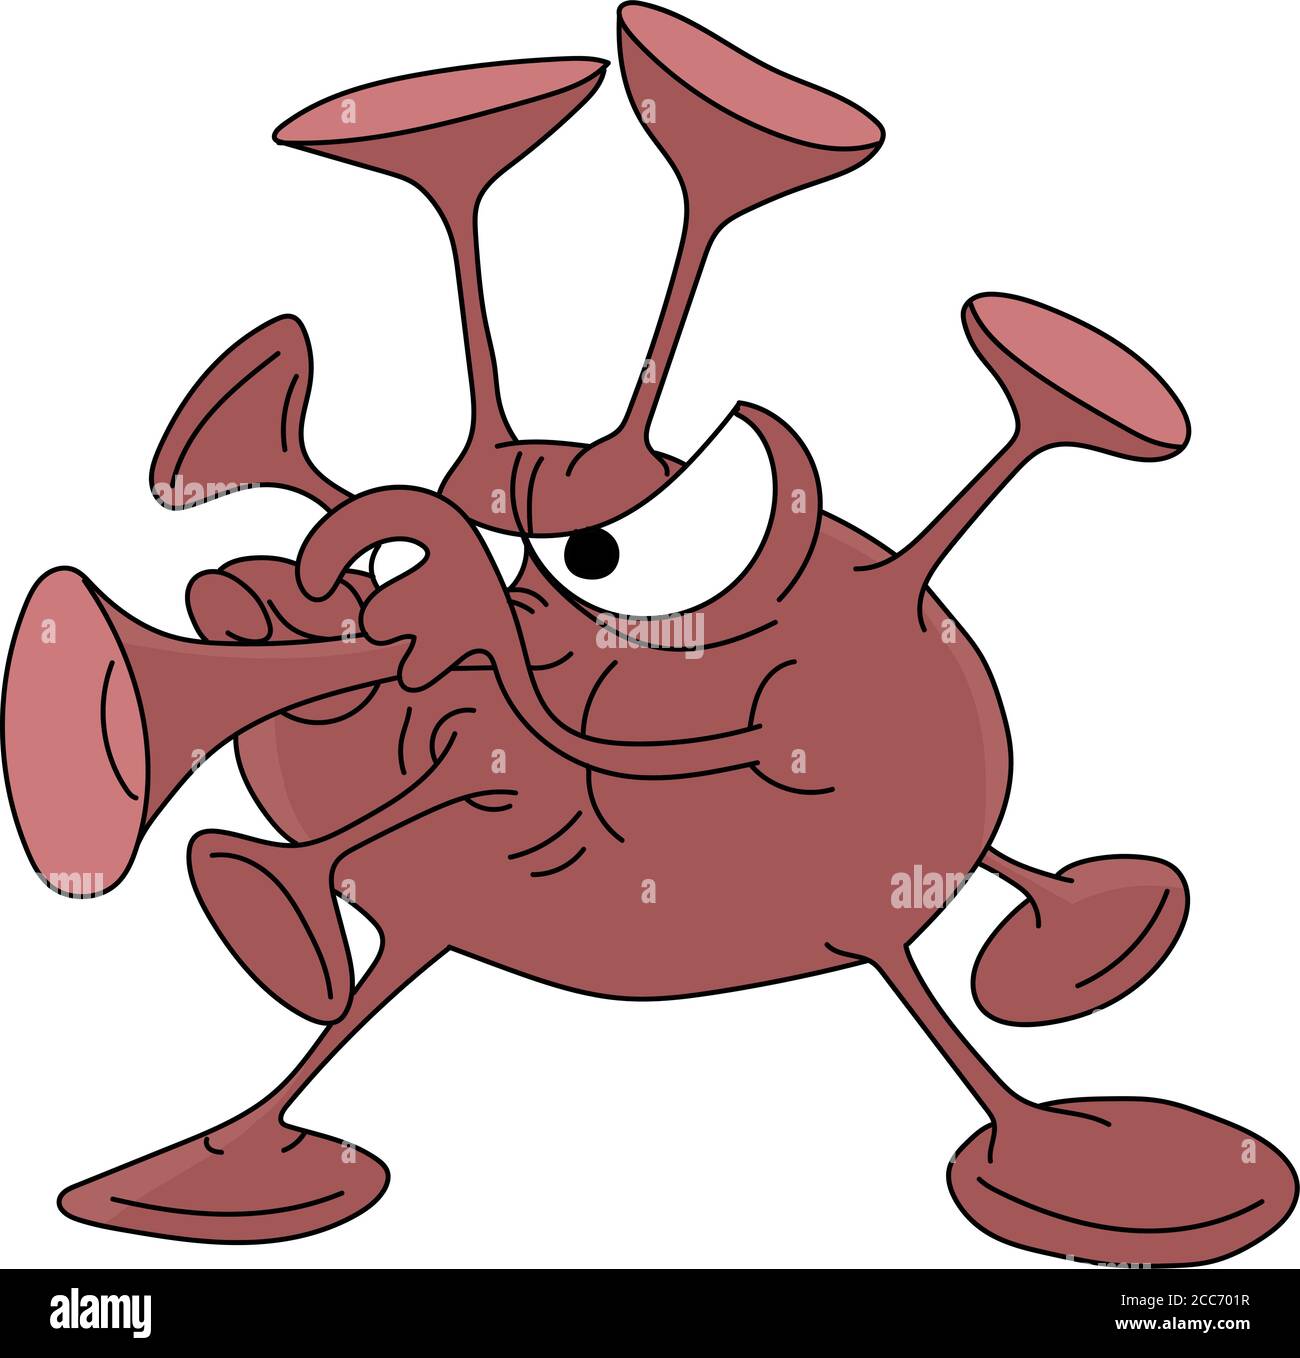 Dangerous and infectious corona virus cartoon vector illustration Stock Vector